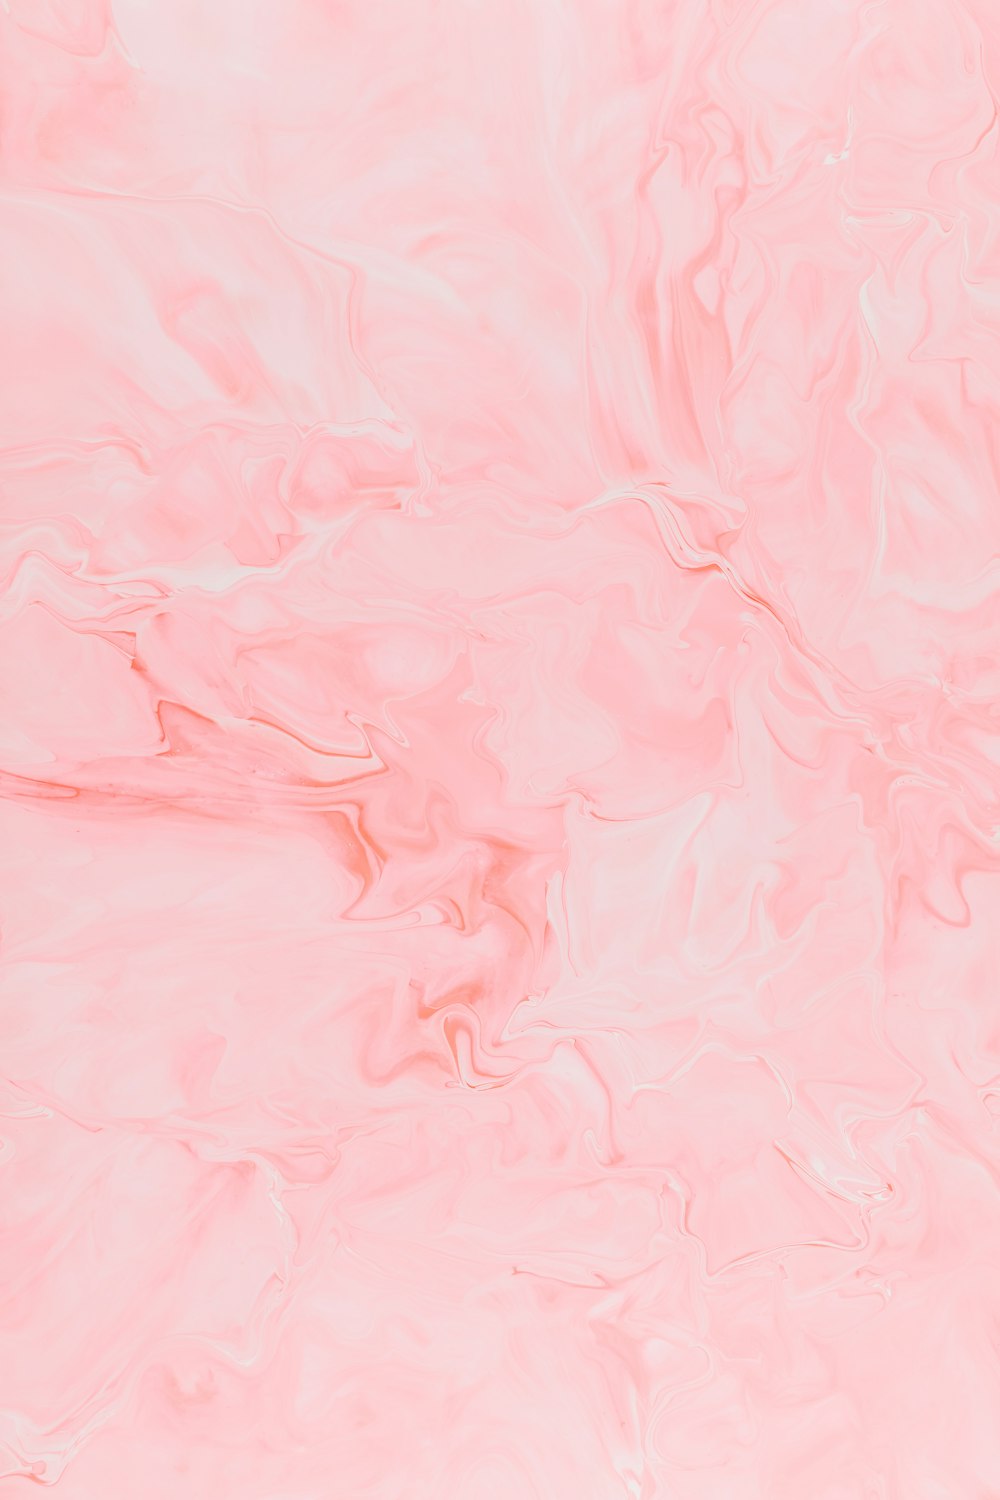 1K+ Pink Marble Pictures | Download Free Images on Unsplash